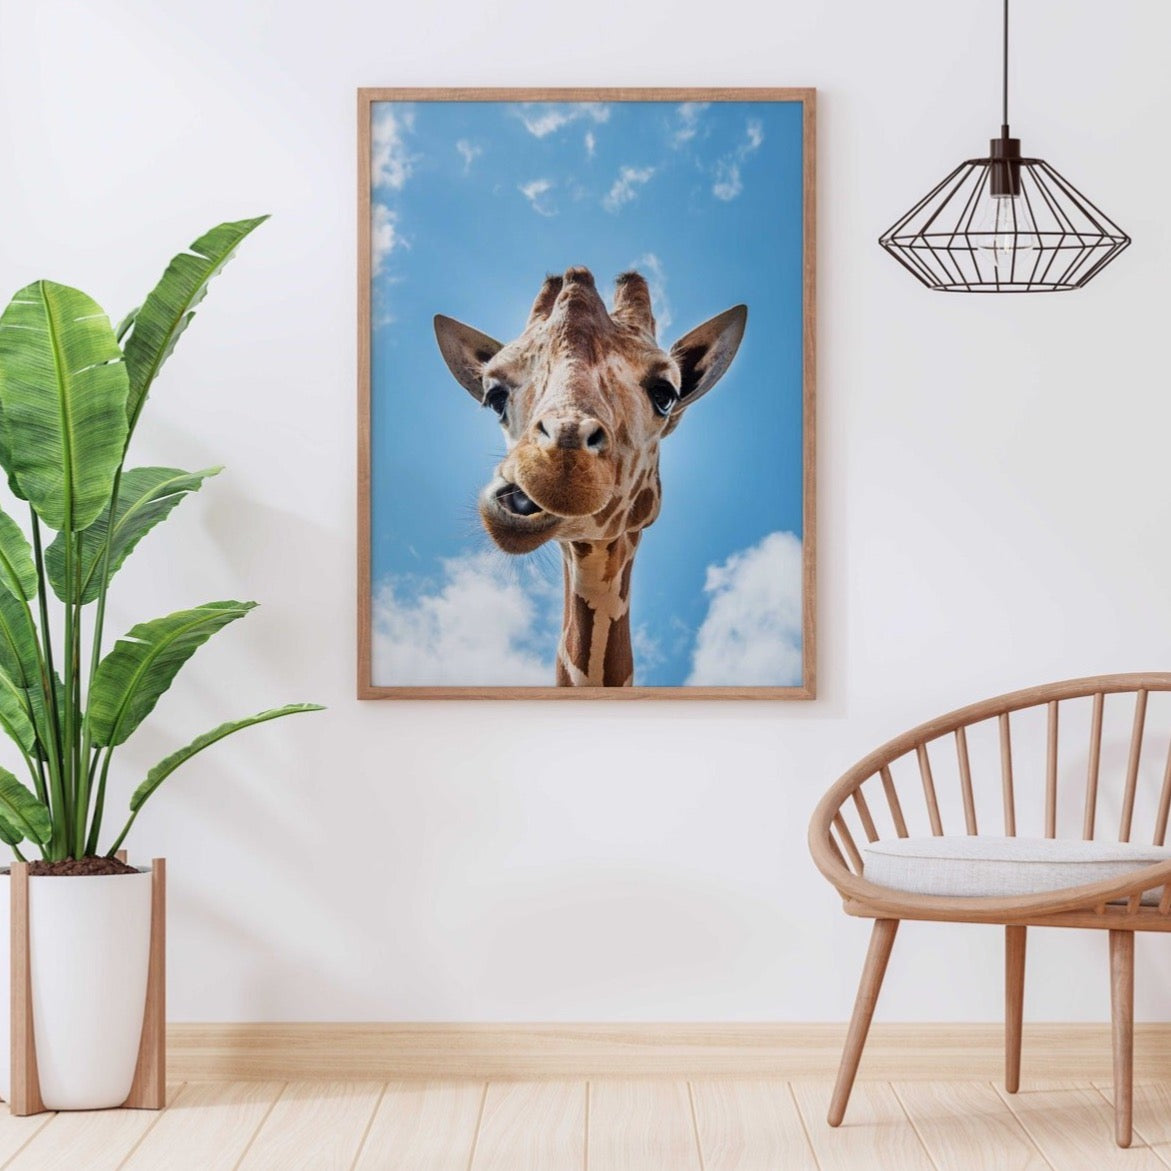 CAROL M. HIGHSMITH – Giraffe aus nächster Nähe (im Gladys Porter Zoo)